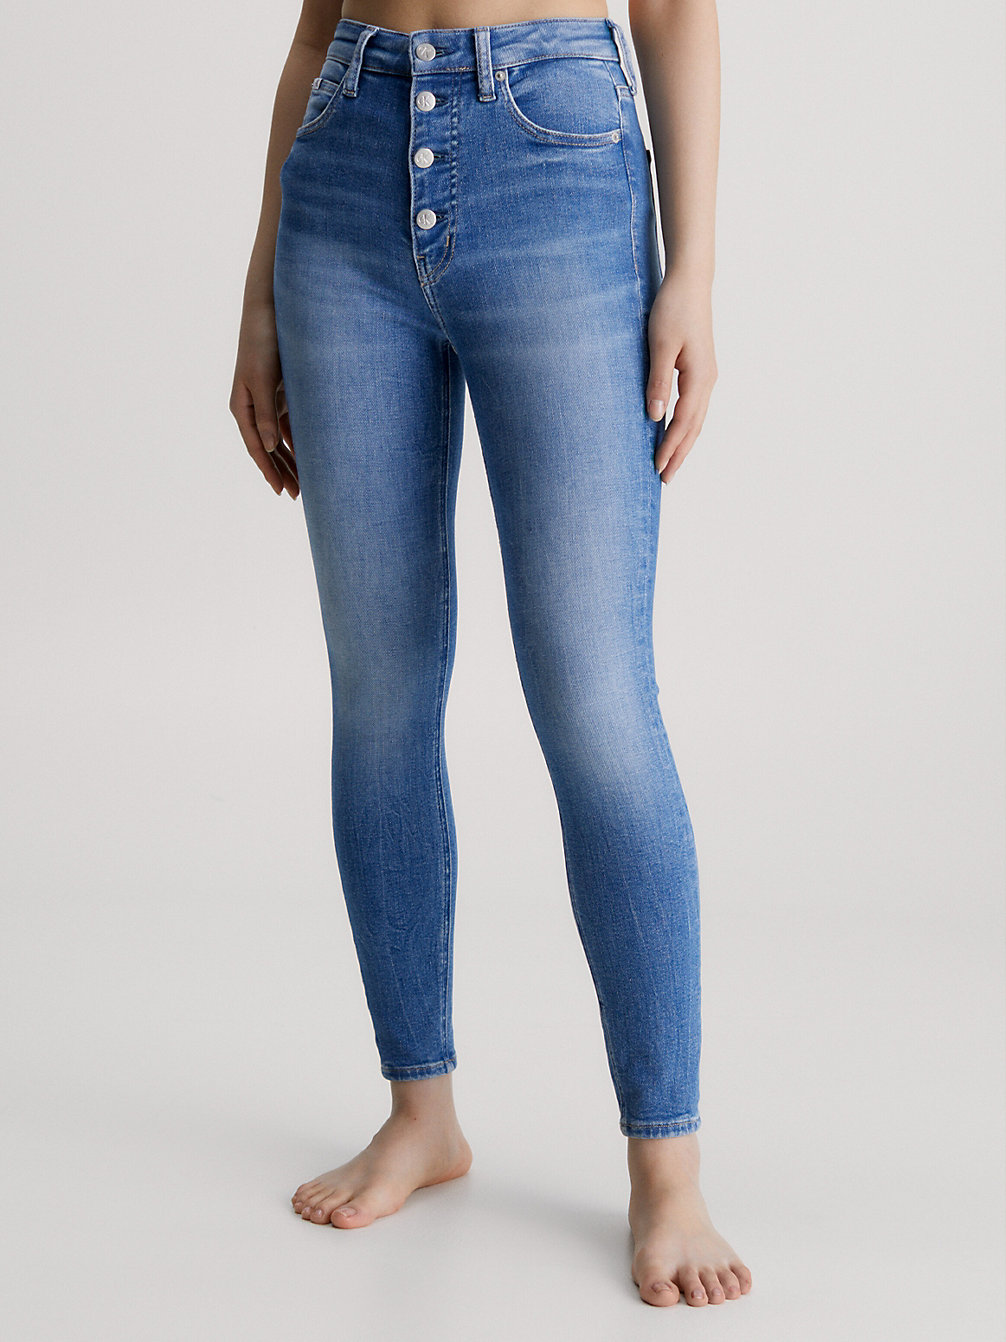 Jeans High Rise Super Skinny Tobilleros > DENIM MEDIUM > undefined mujer > Calvin Klein